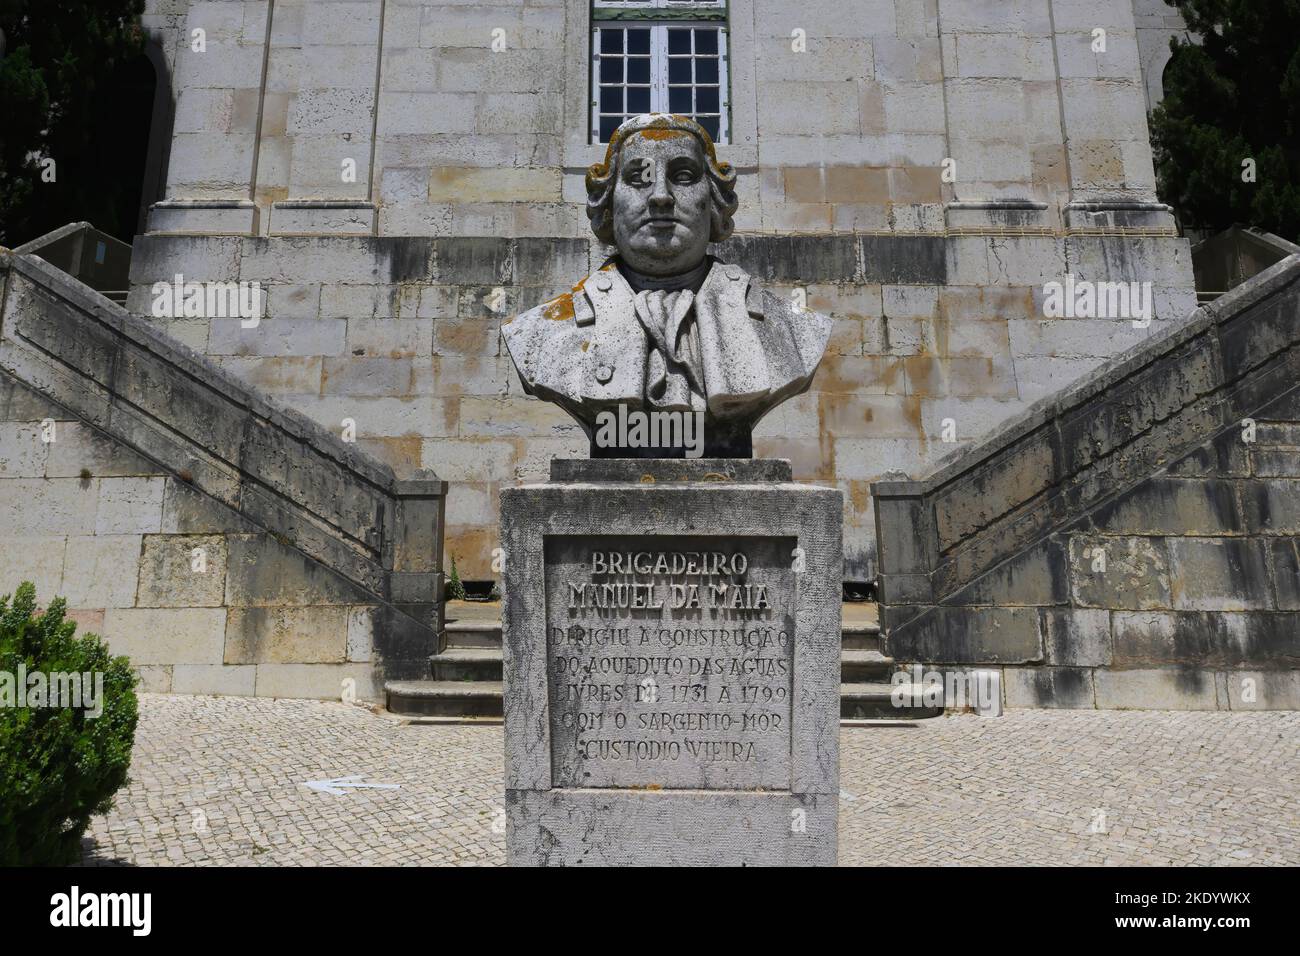 Manuel da Maia Statue in front of Water Museum entrance, Mae de Agua reservoir, Lisbon, Portugal Stock Photo